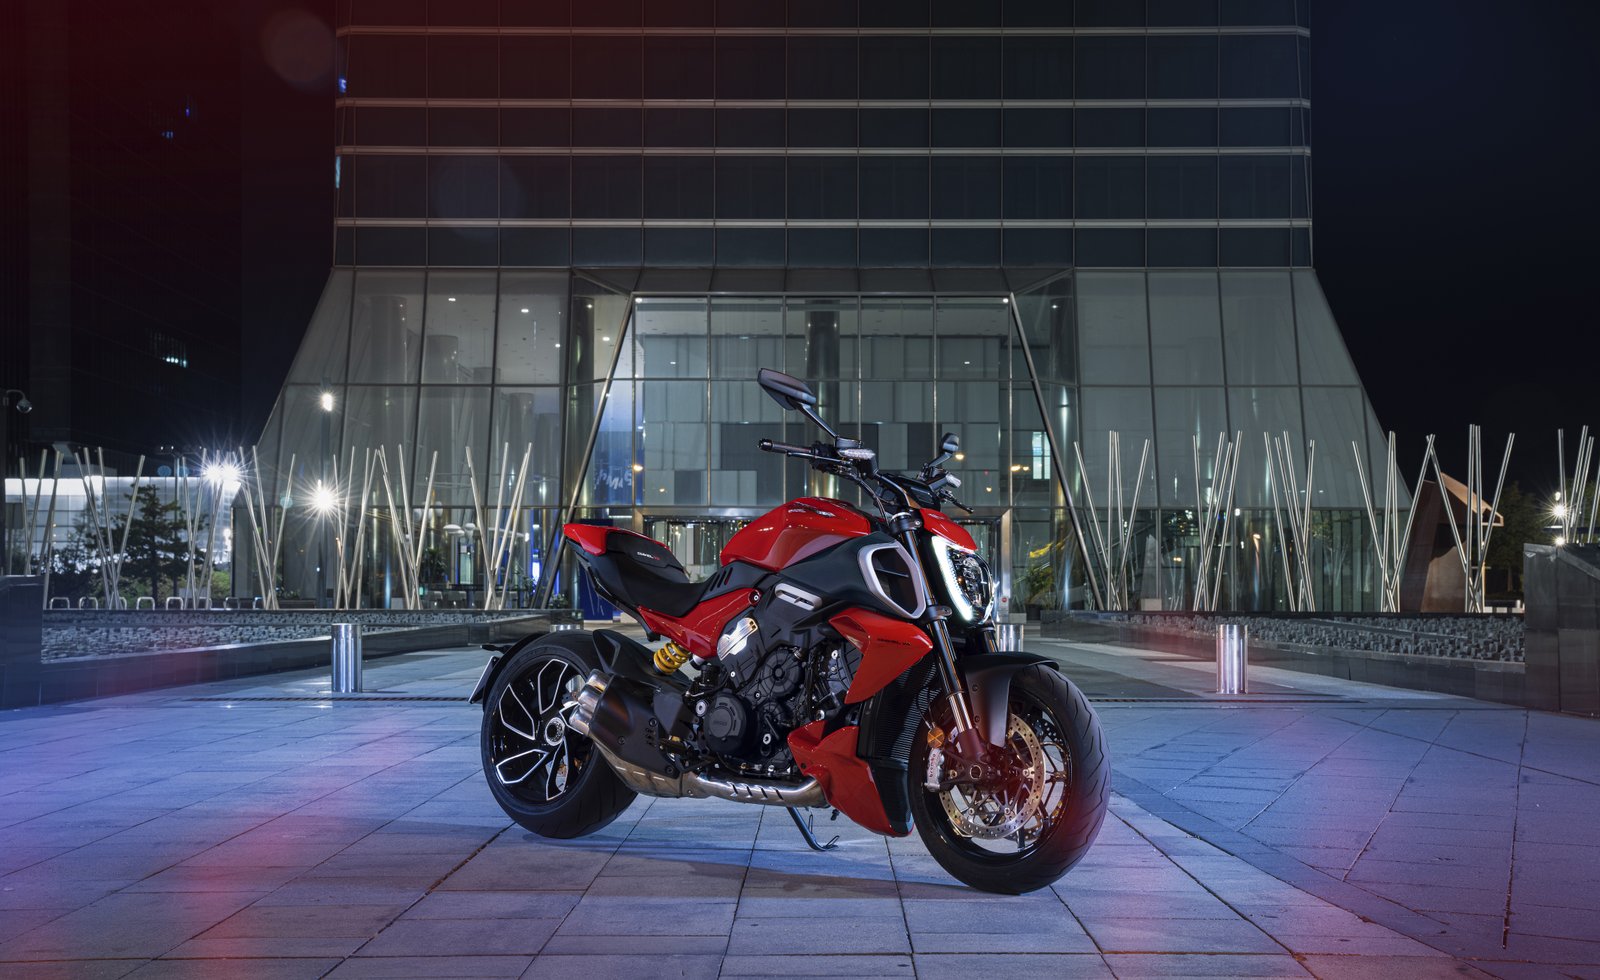 Ducati Diavel V4 is the “Moto più bella” (Most Beautiful Bike) at EICMA 2022